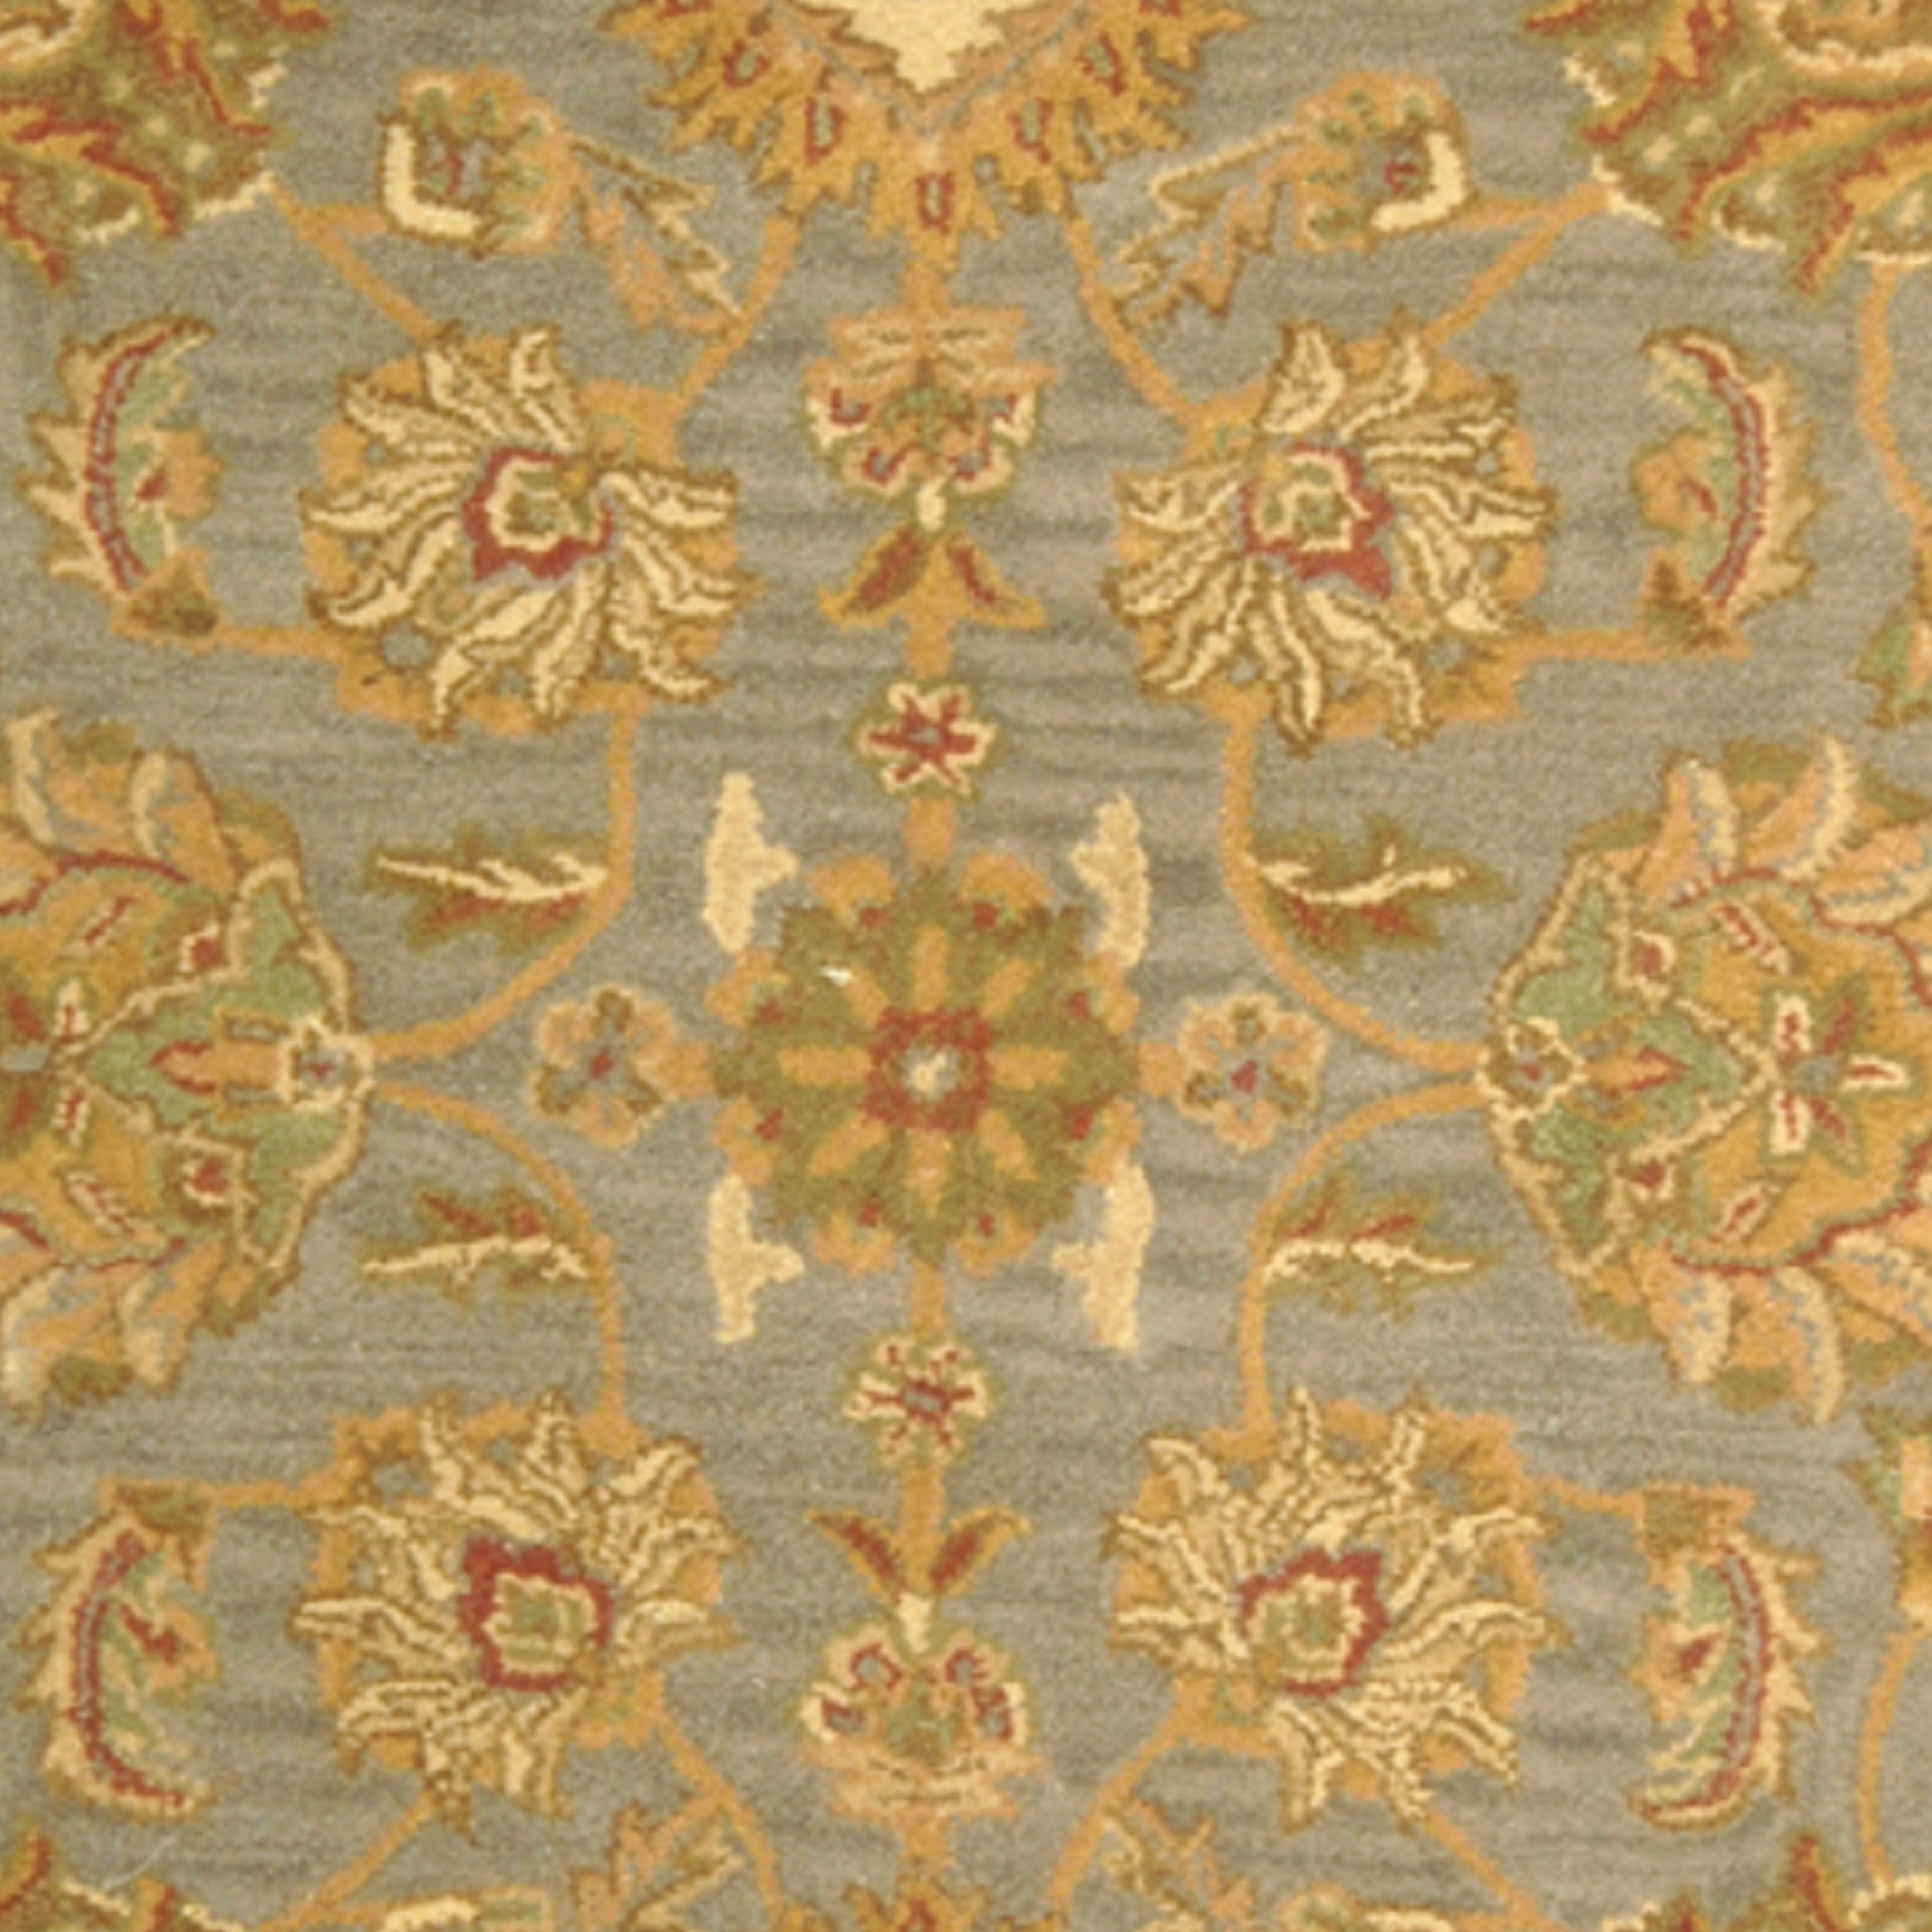 SAFAVIEH Heritage Regis Traditional Wool Area Rug, Blue/Beige, 6' x 9' - image 3 of 4